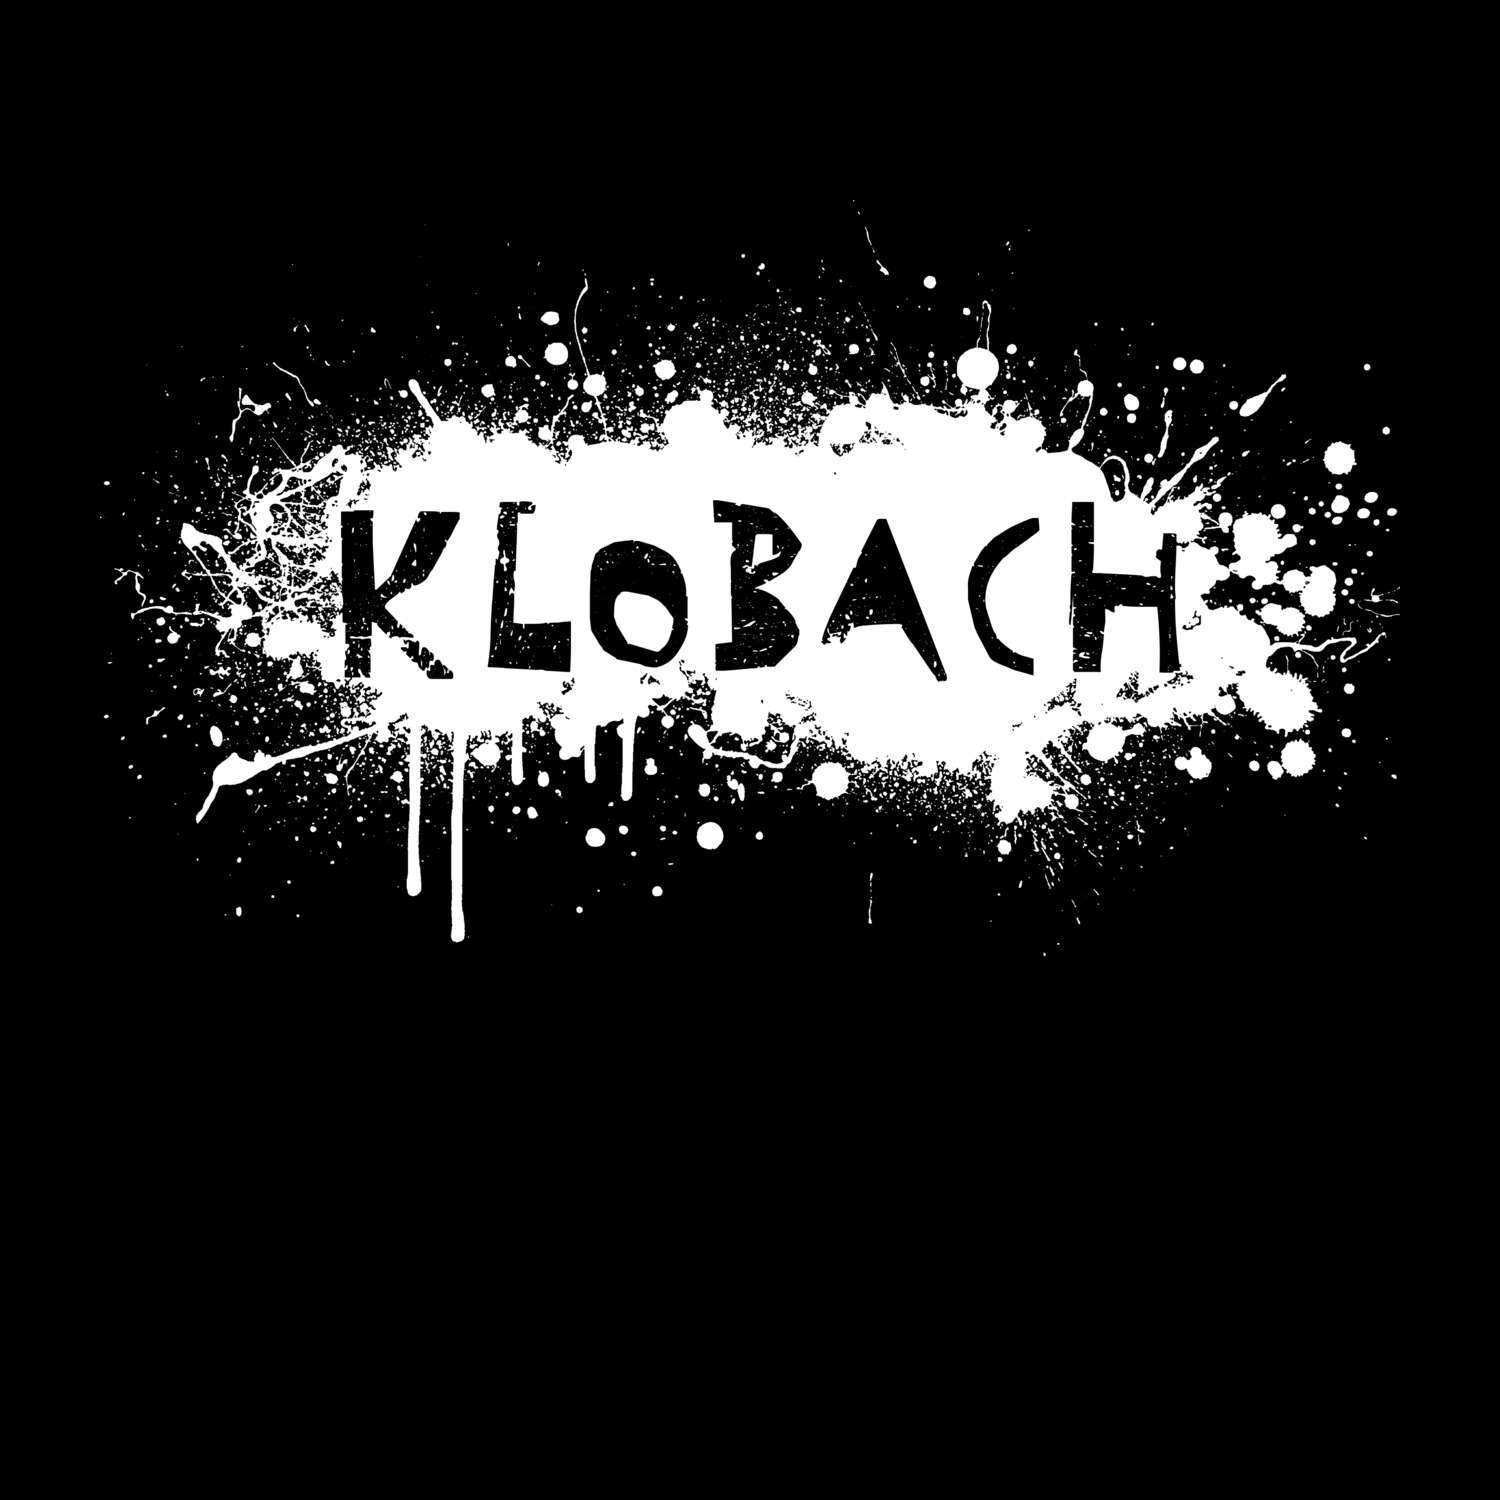 Klobach T-Shirt »Paint Splash Punk«